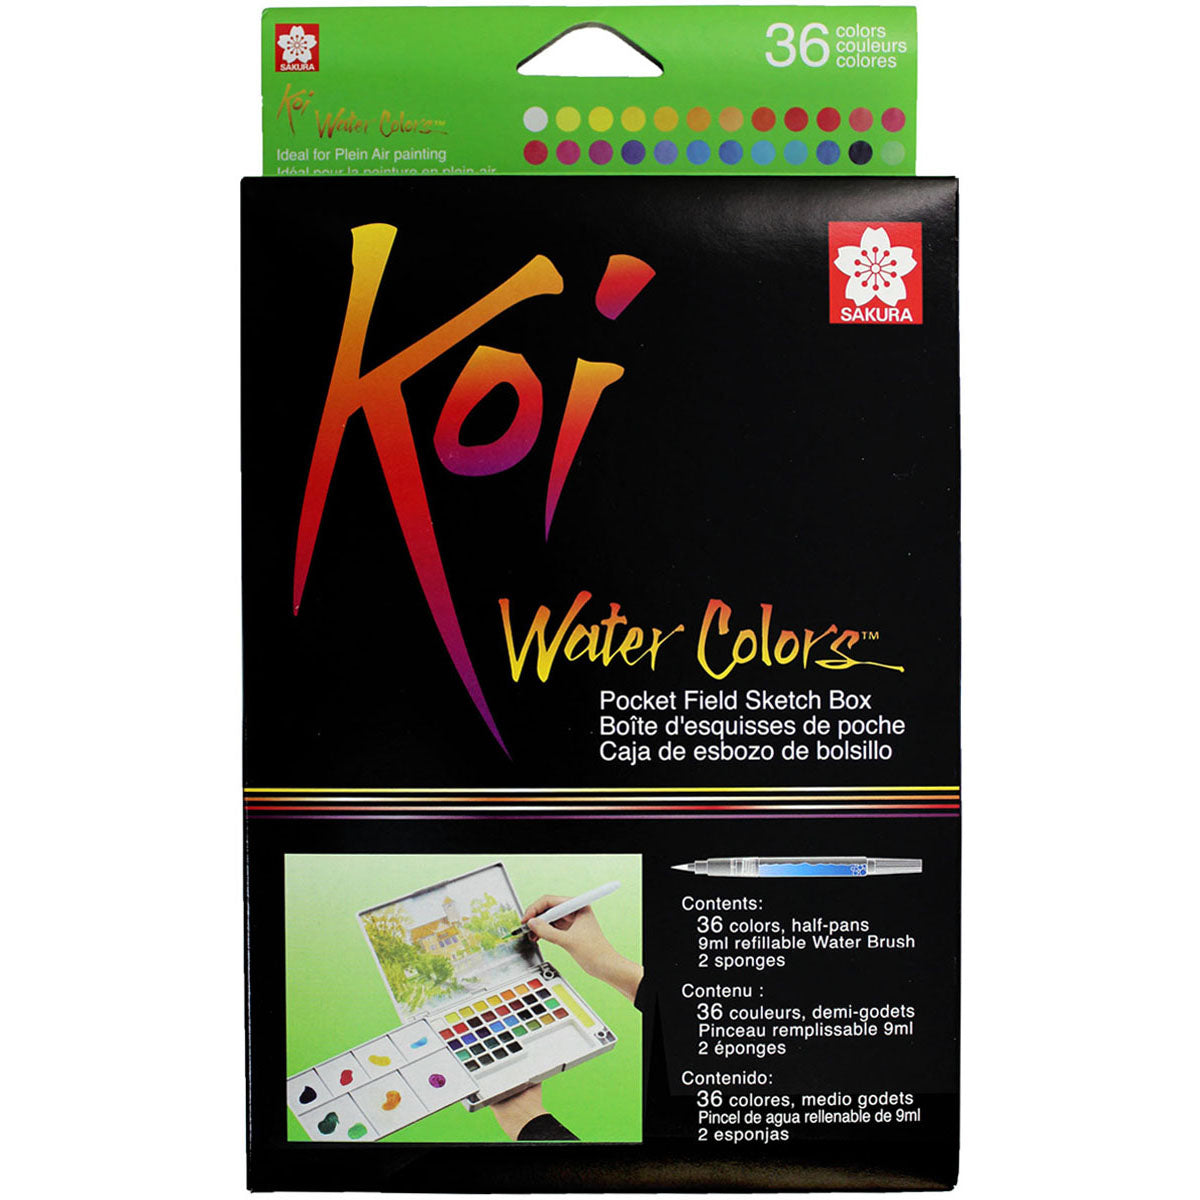 Koi Watercolor Pocket Field Sketch Box - 36 Colors